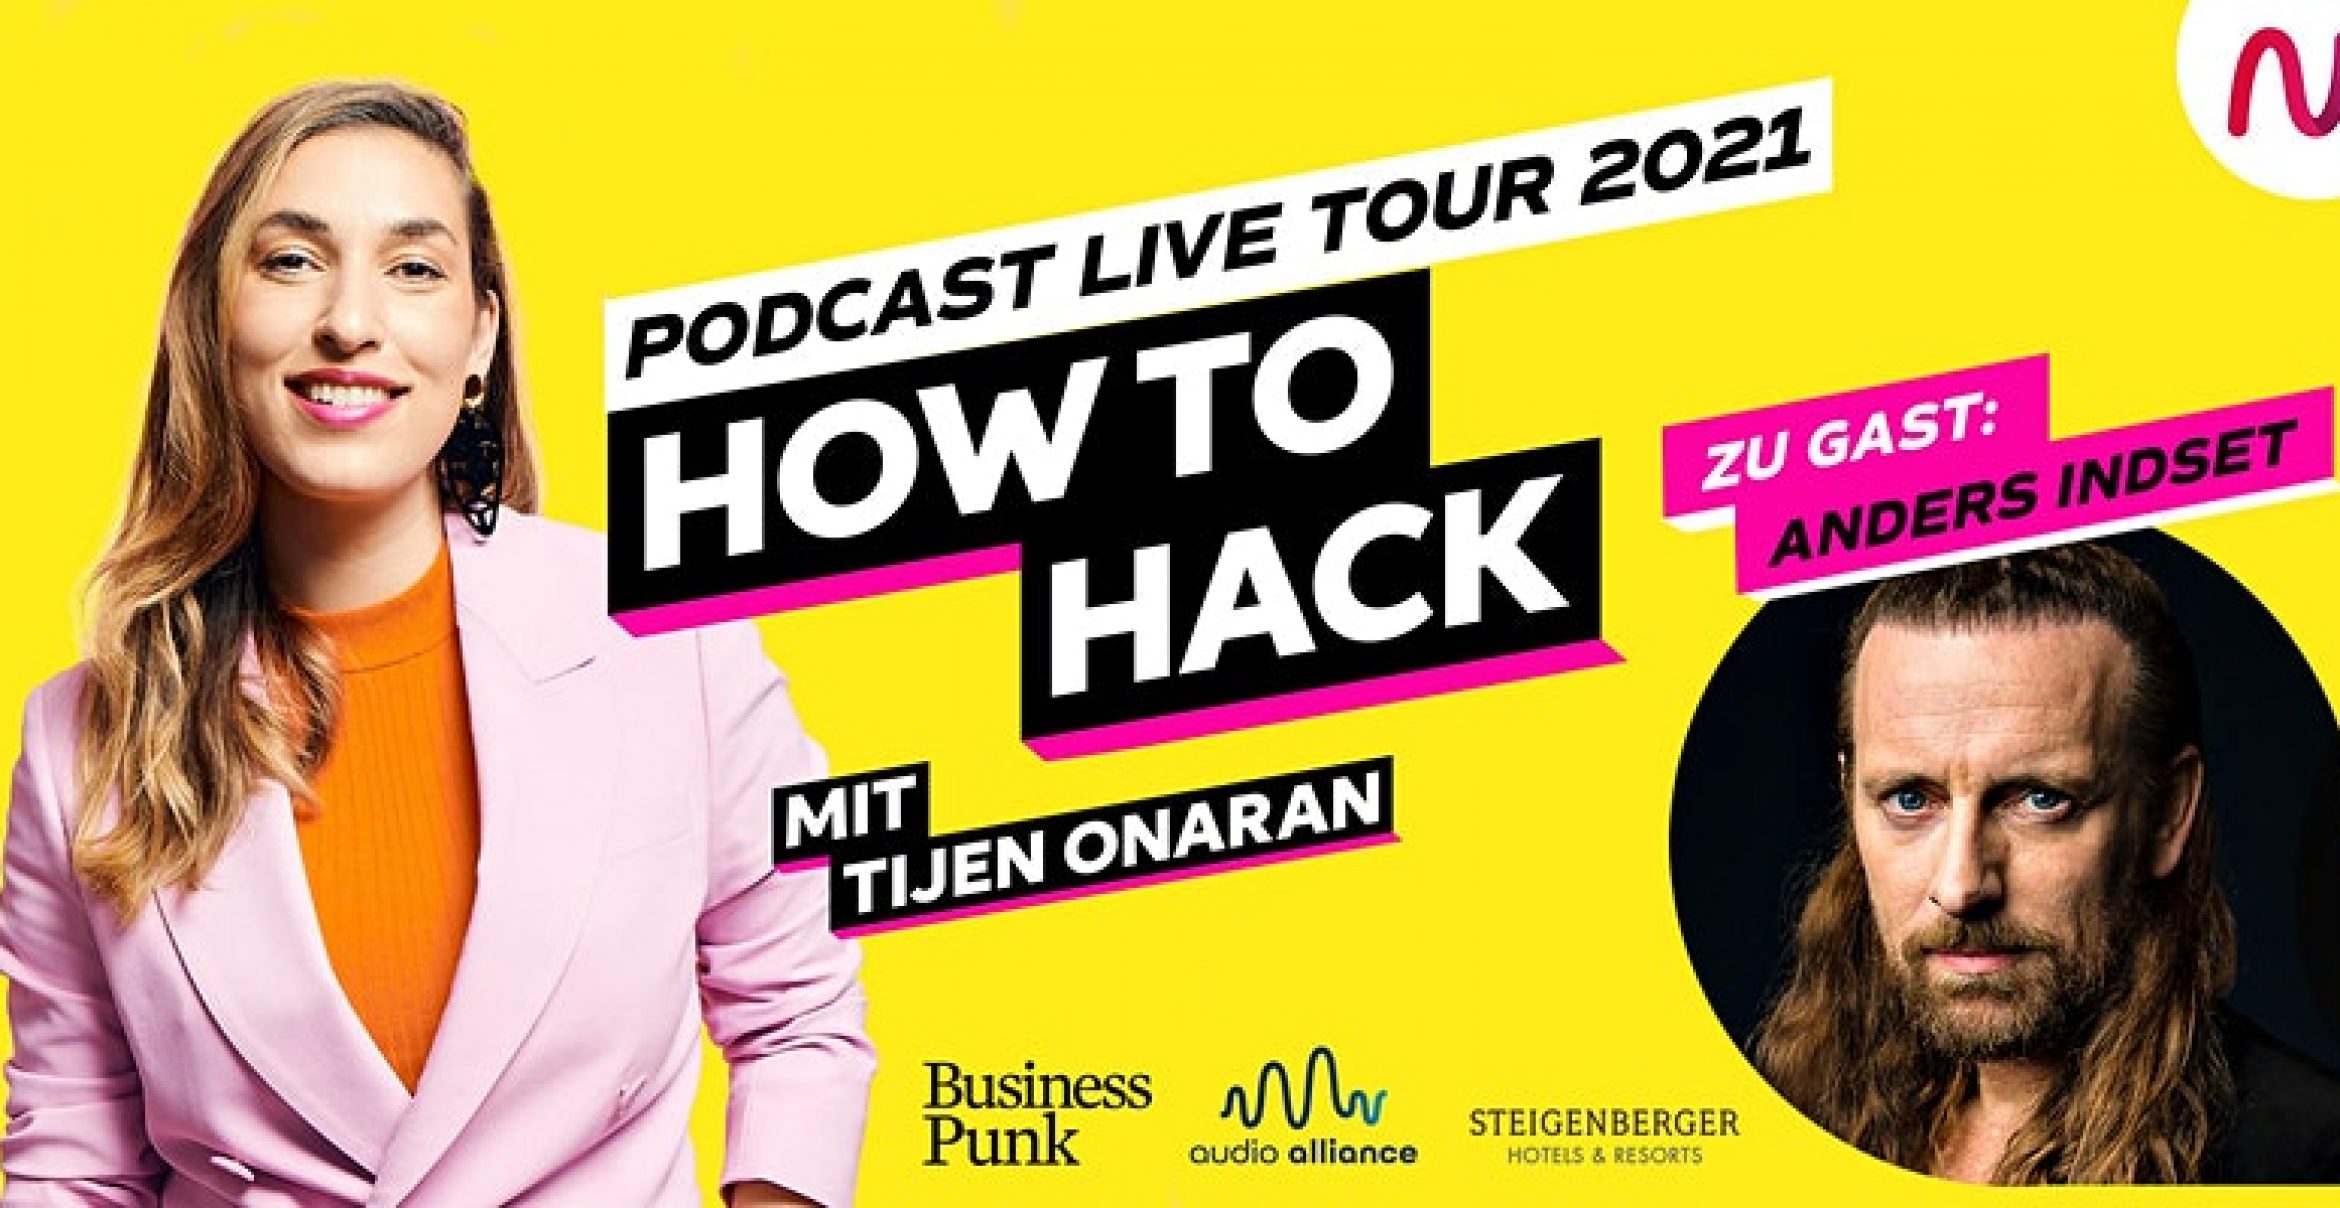 Live-Podcast HOW TO HACK mit Tijen Onaran und Anders Indset